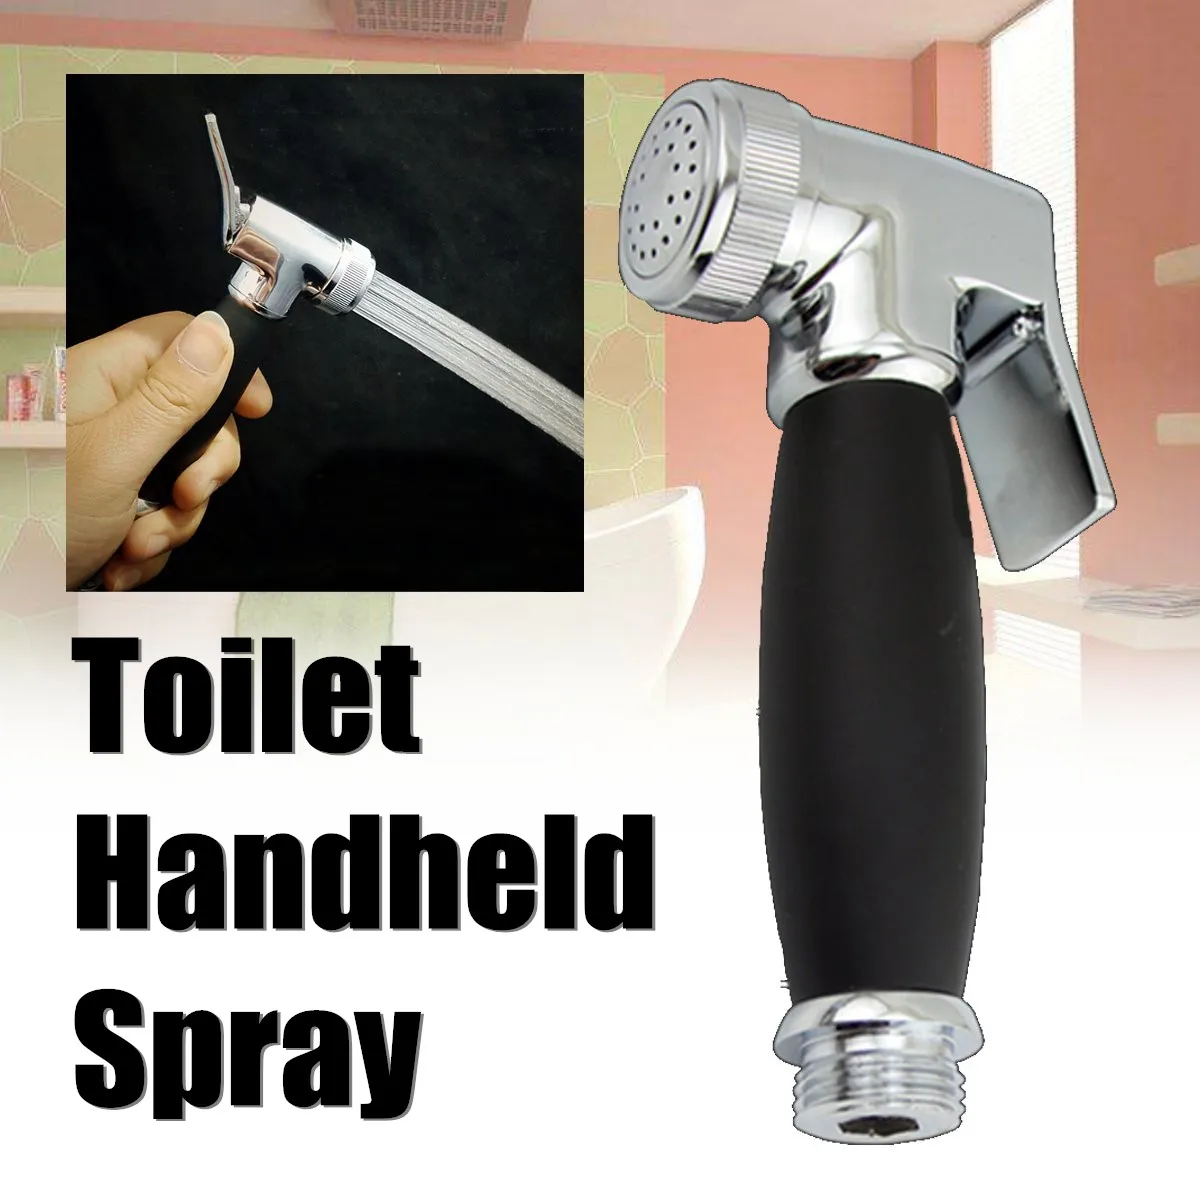 

3 Pcs Hand Held Shower Head Jet Douche Bidet Sprayer Toilet Spray Diverter Set Wall Mounted Toilet Flushing Device Suit